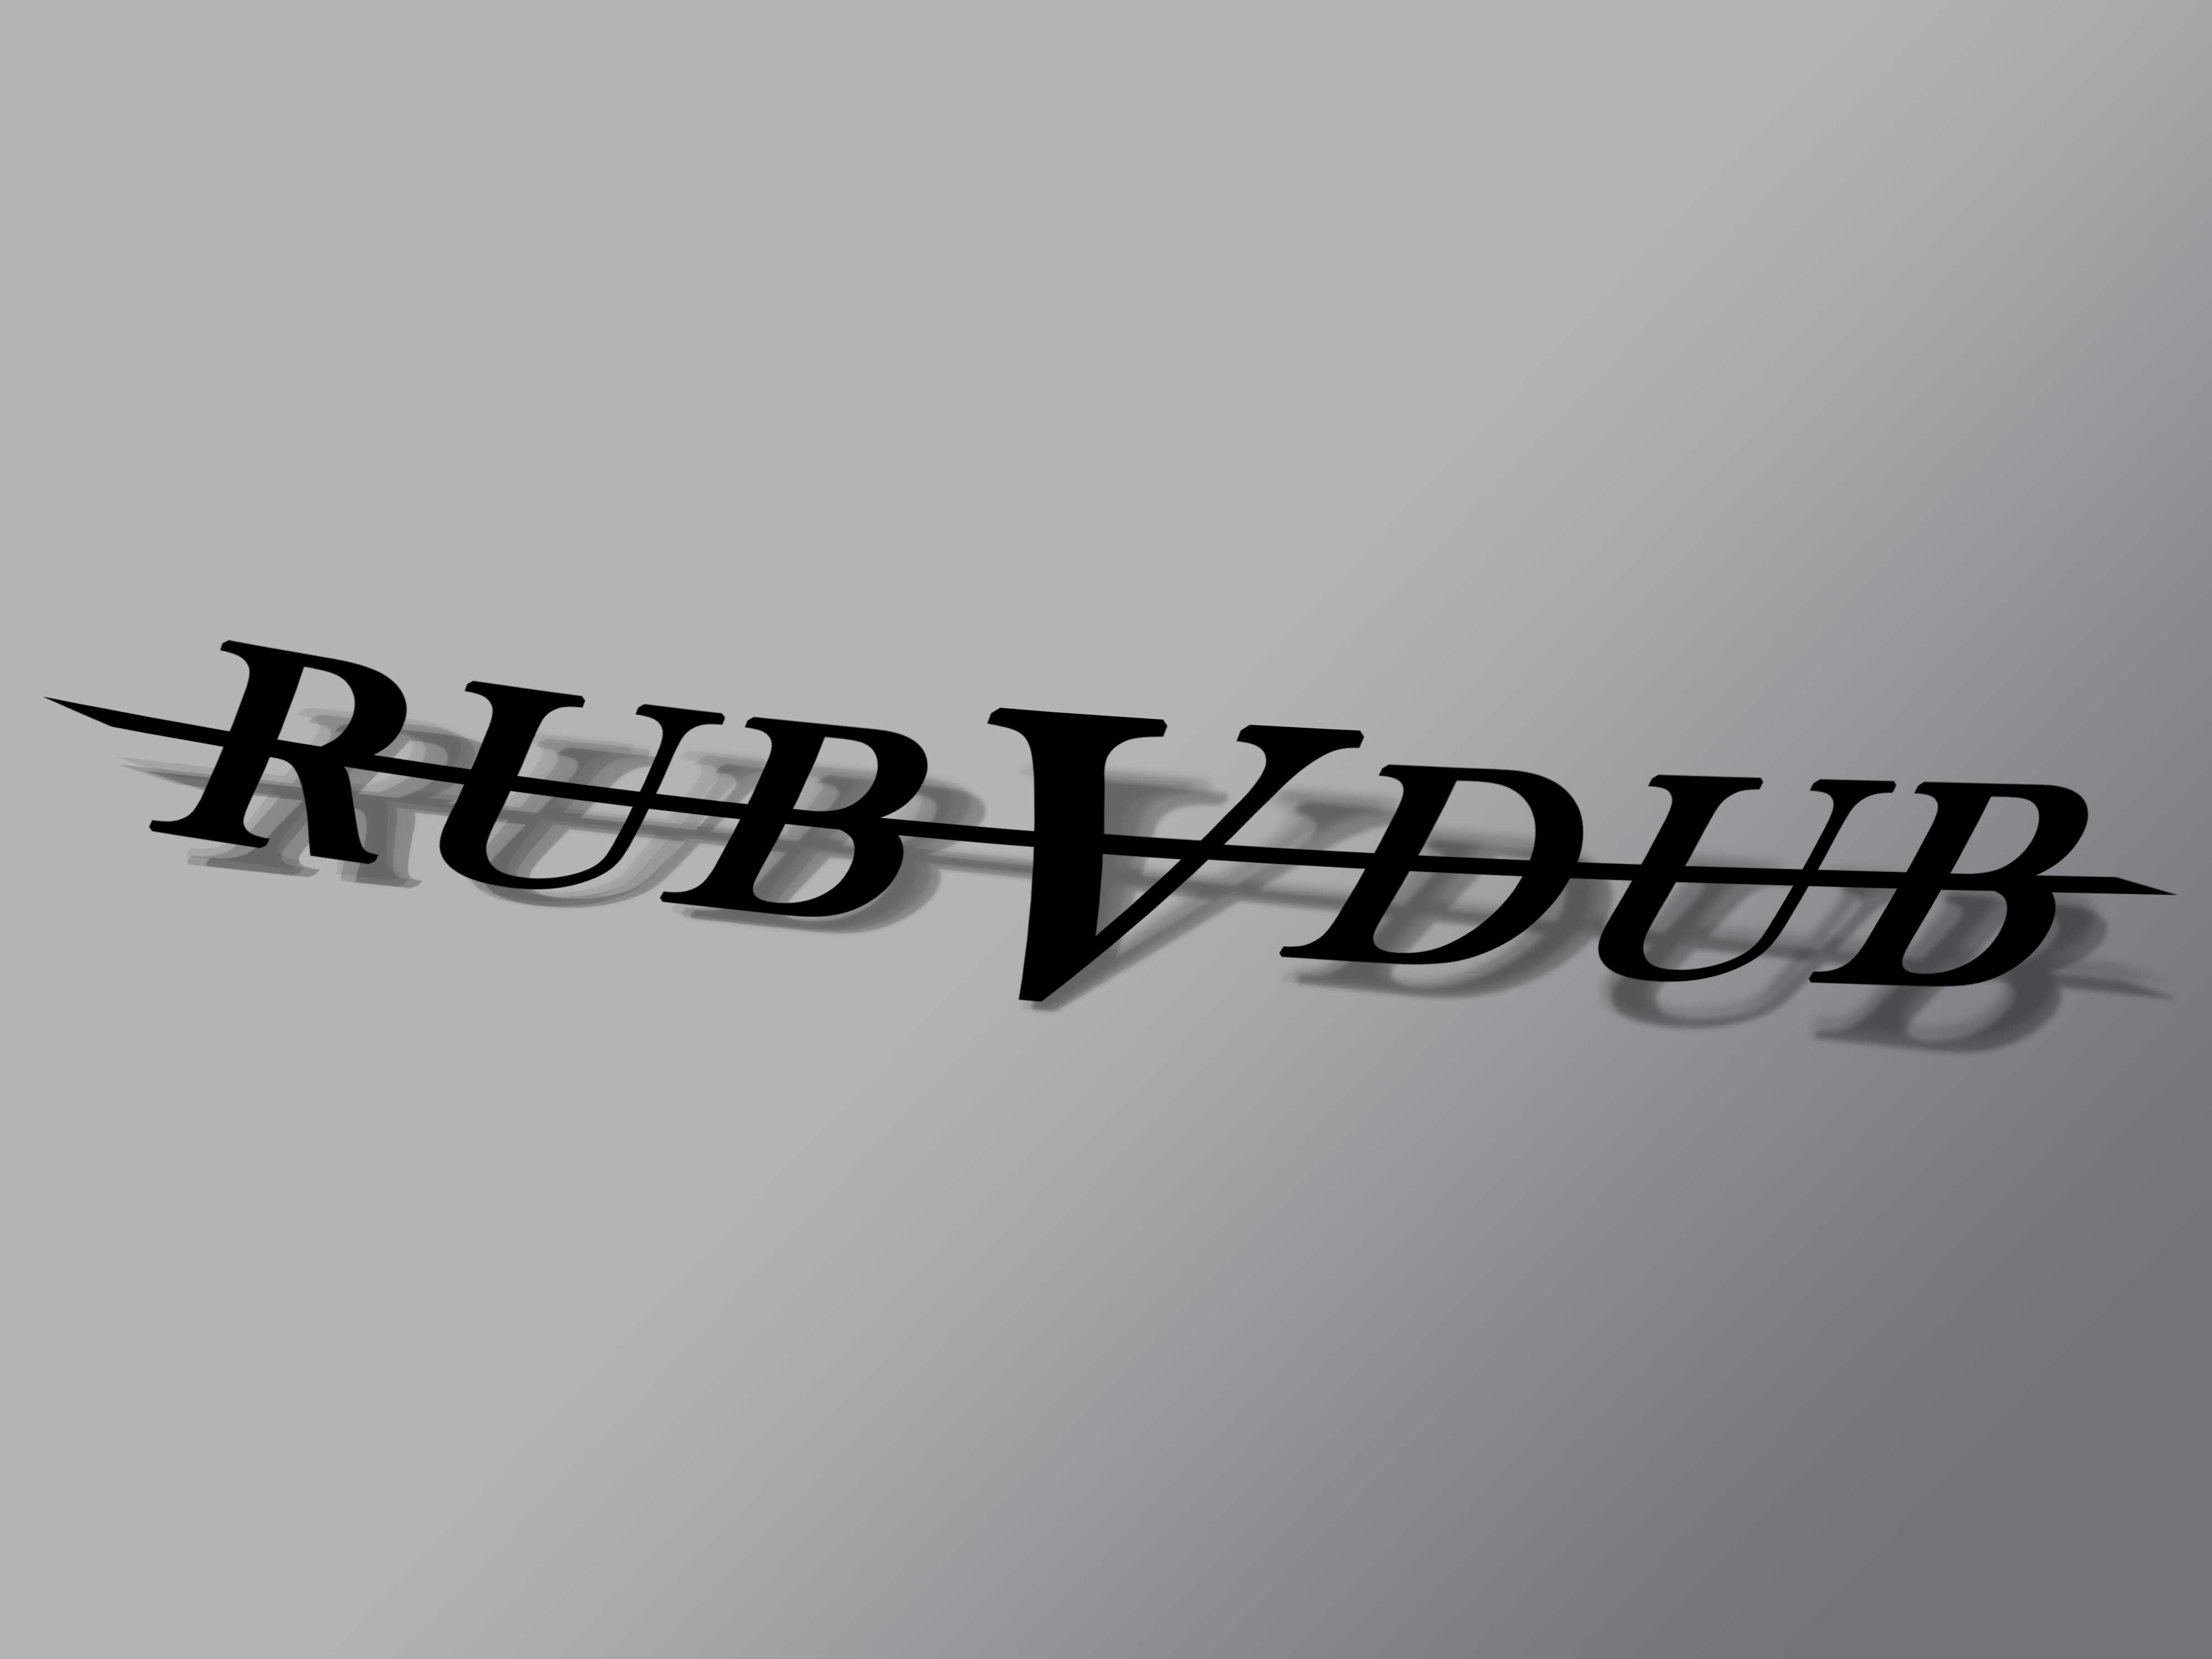 RUBVDUB Lower Banner